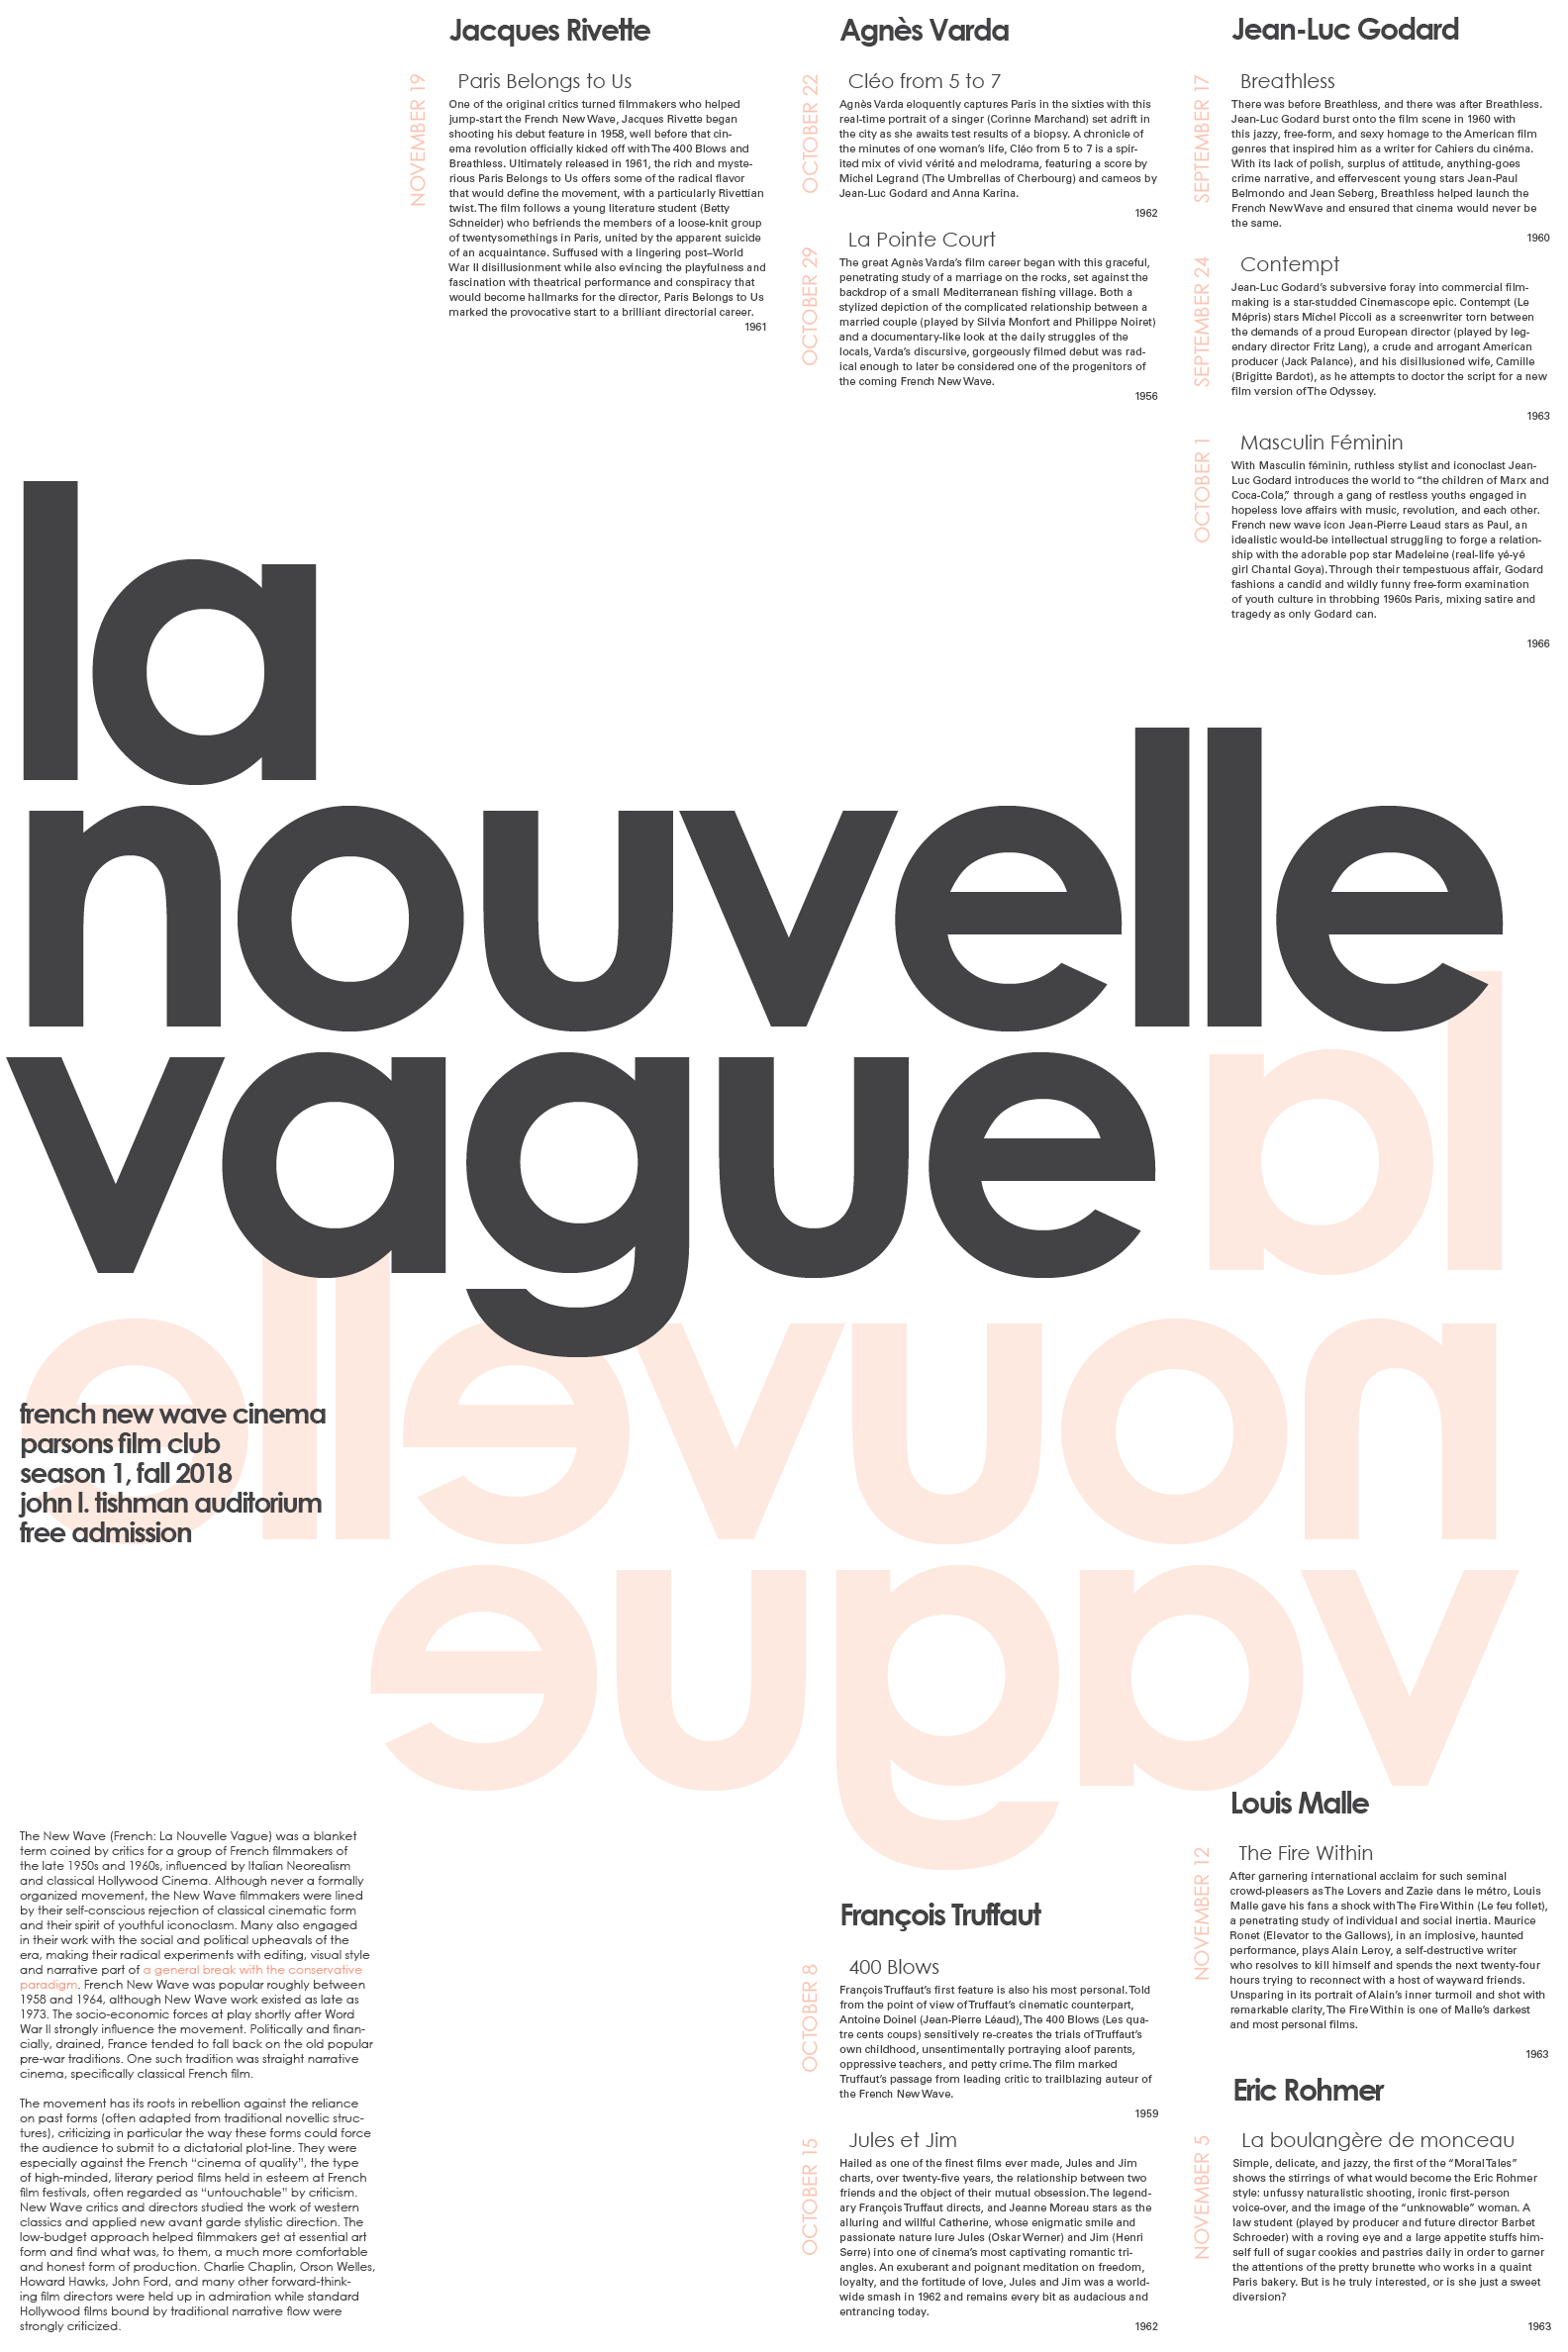 French New Wave Film Festival Poster — Aucher Serr